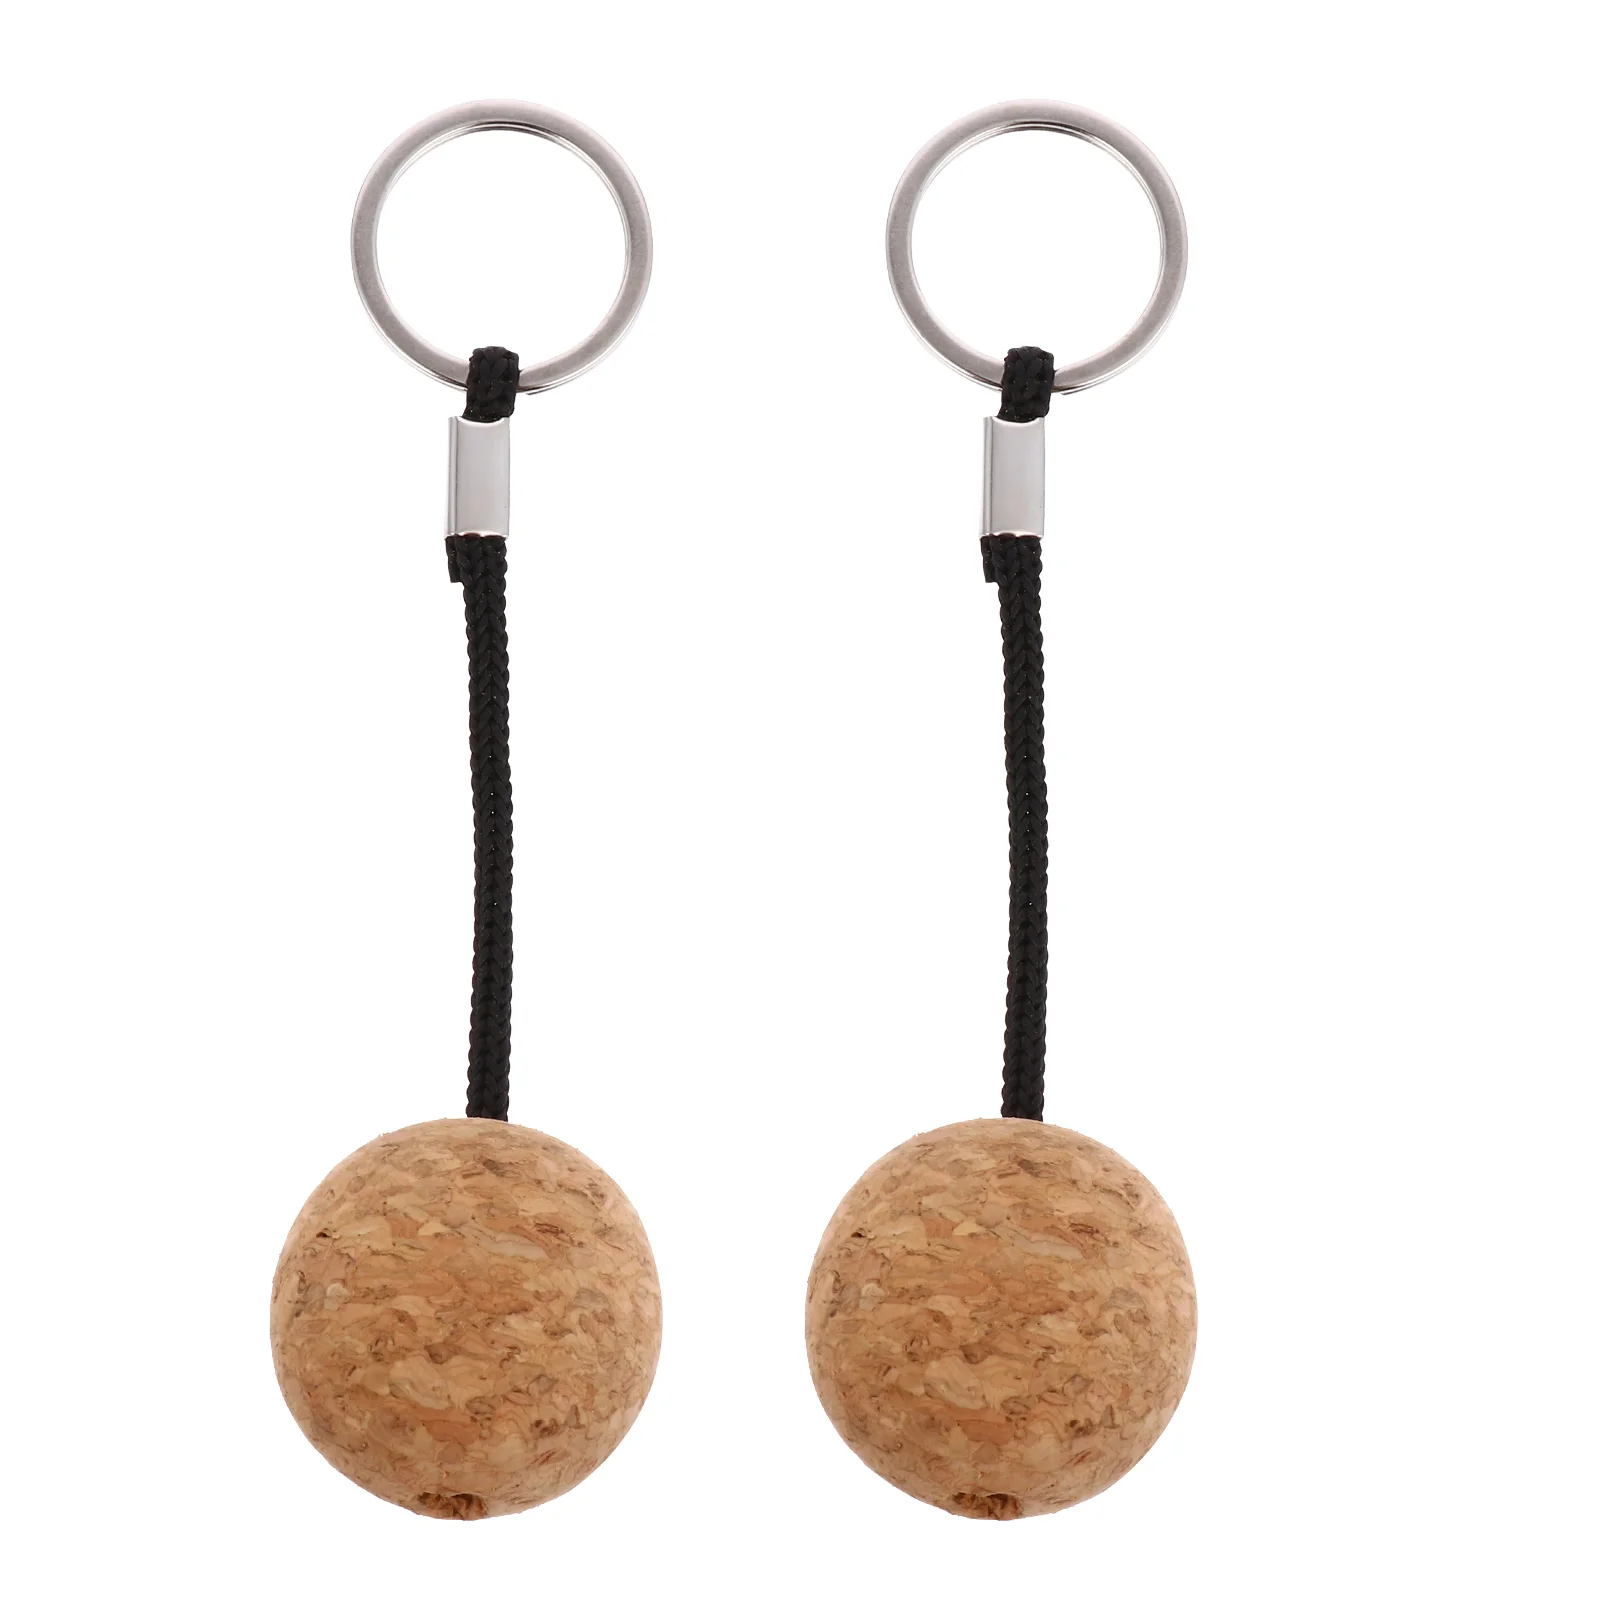 

2 Pcs Keychain for Keys Cork Float Ball Round Floatable Floating Wooden Keyring